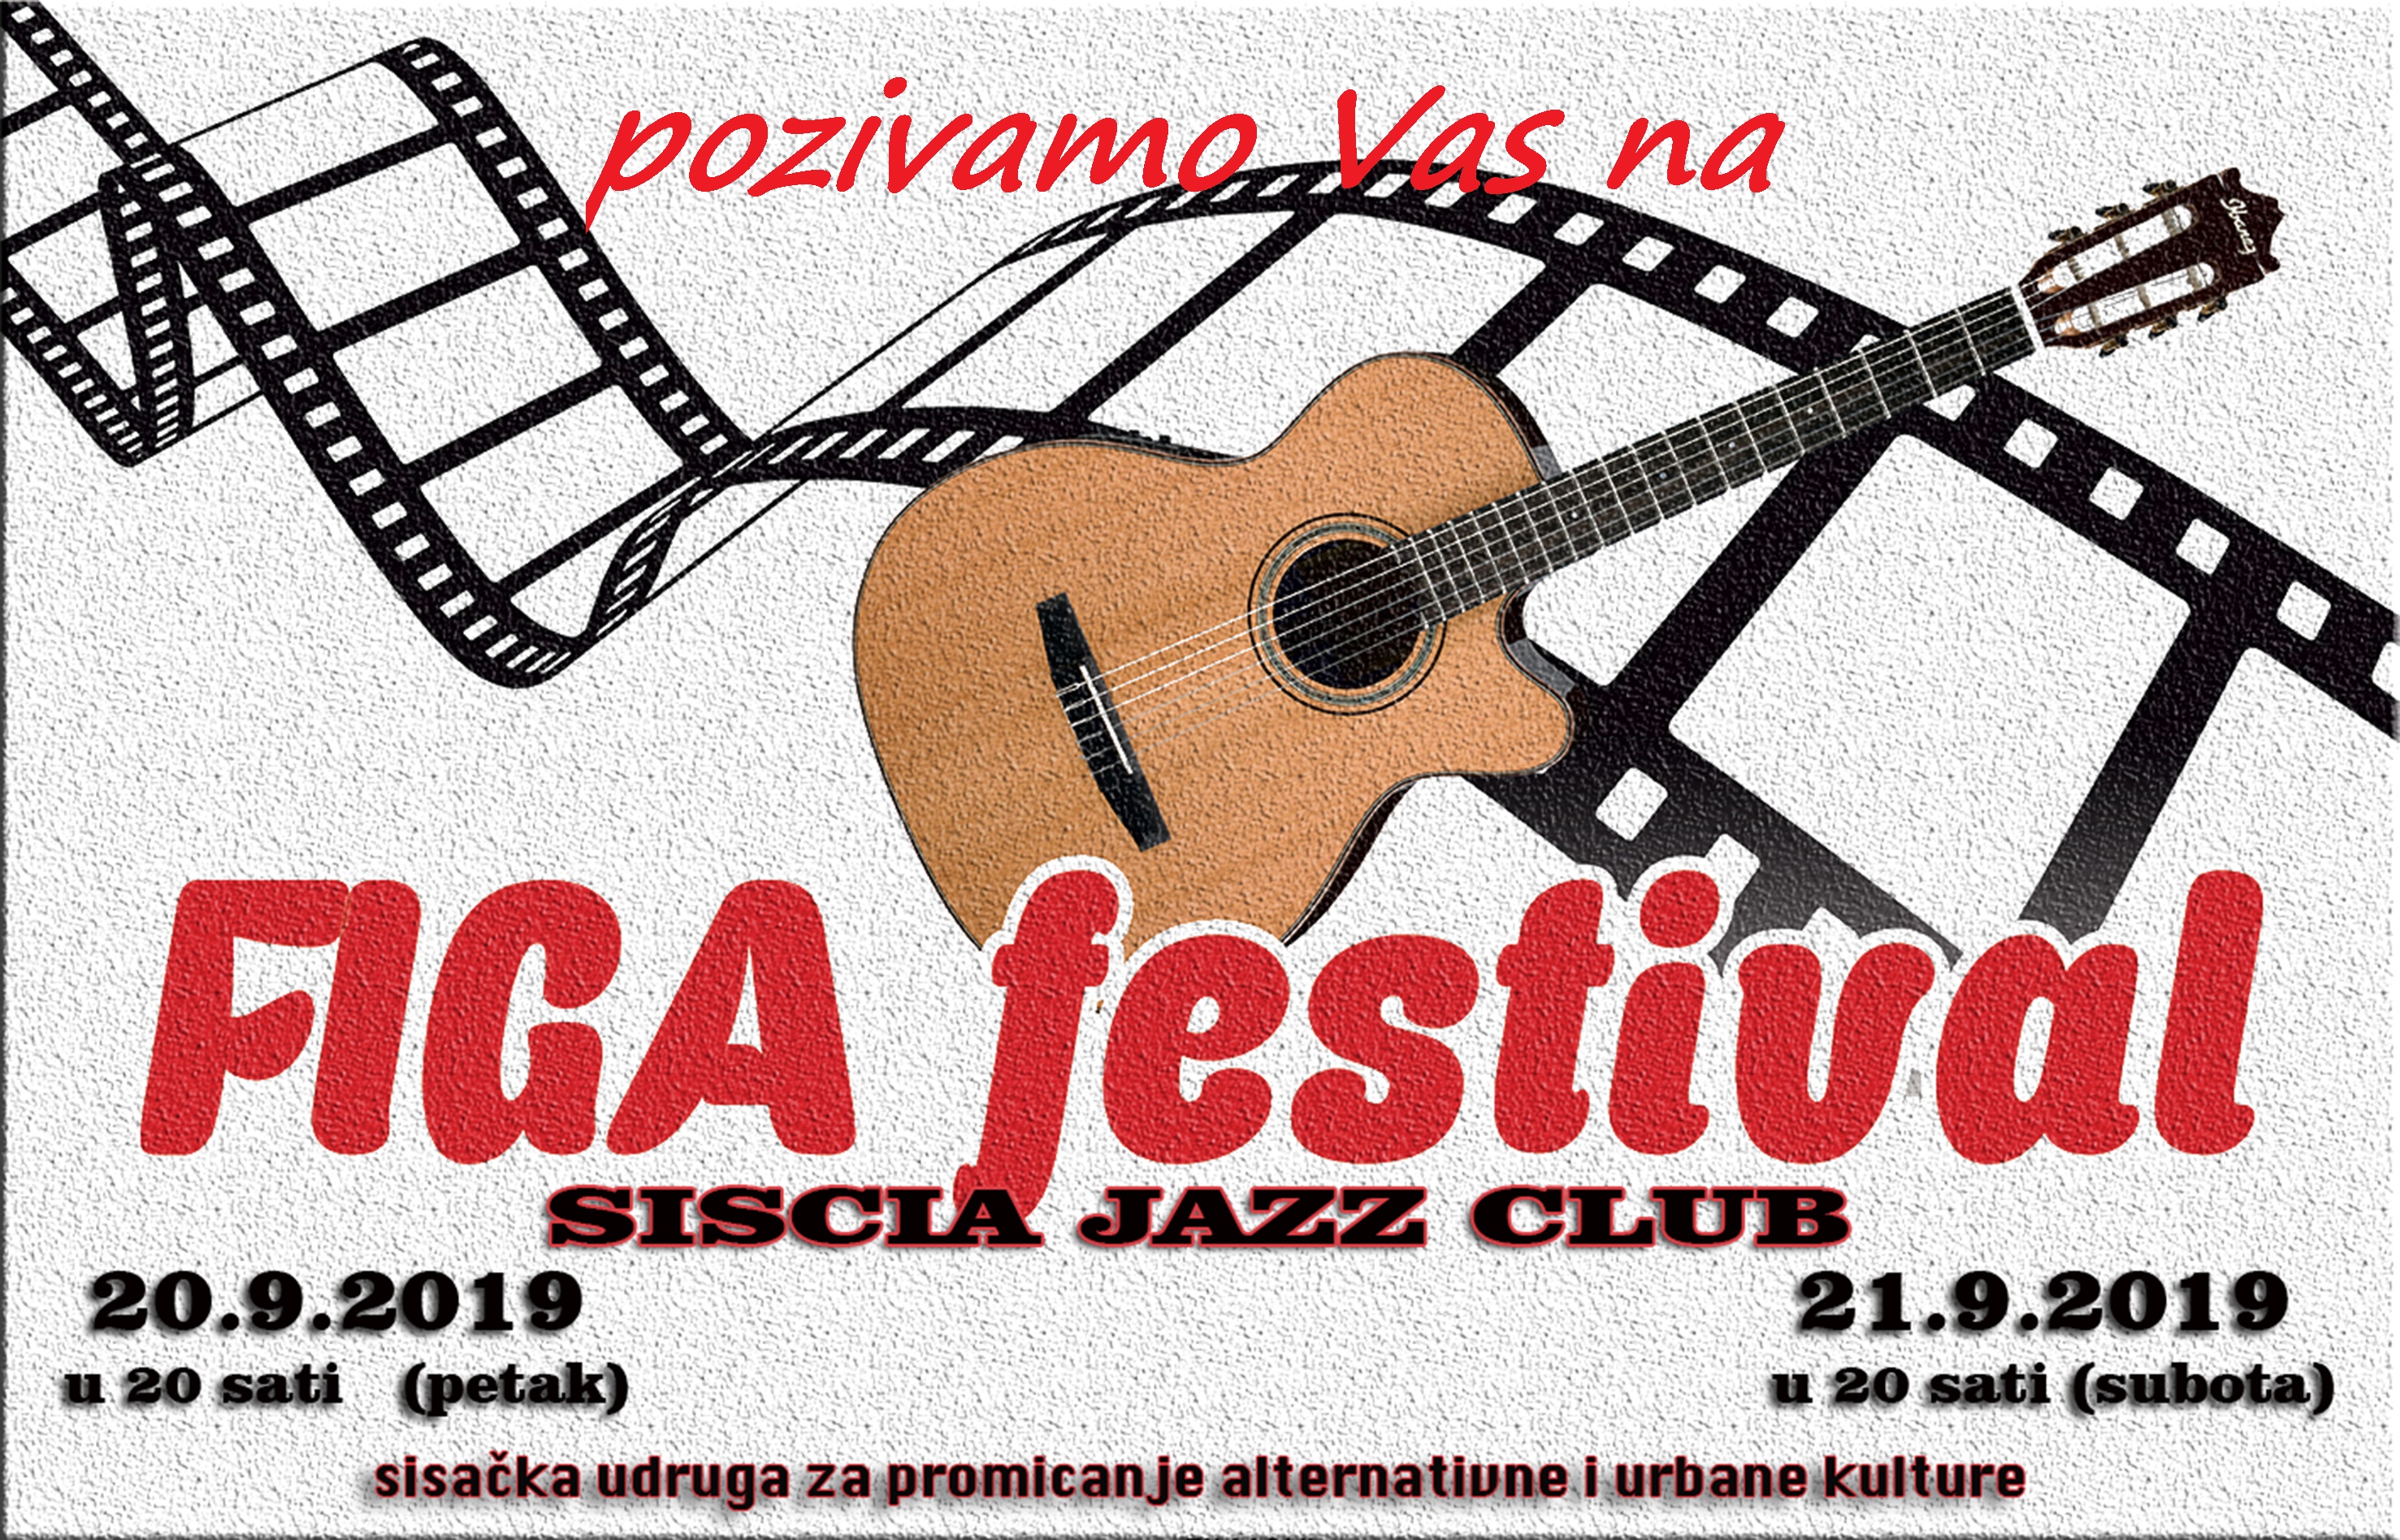 You are currently viewing FIGA filmski i glazbeni festival u Siscia jazz klubu